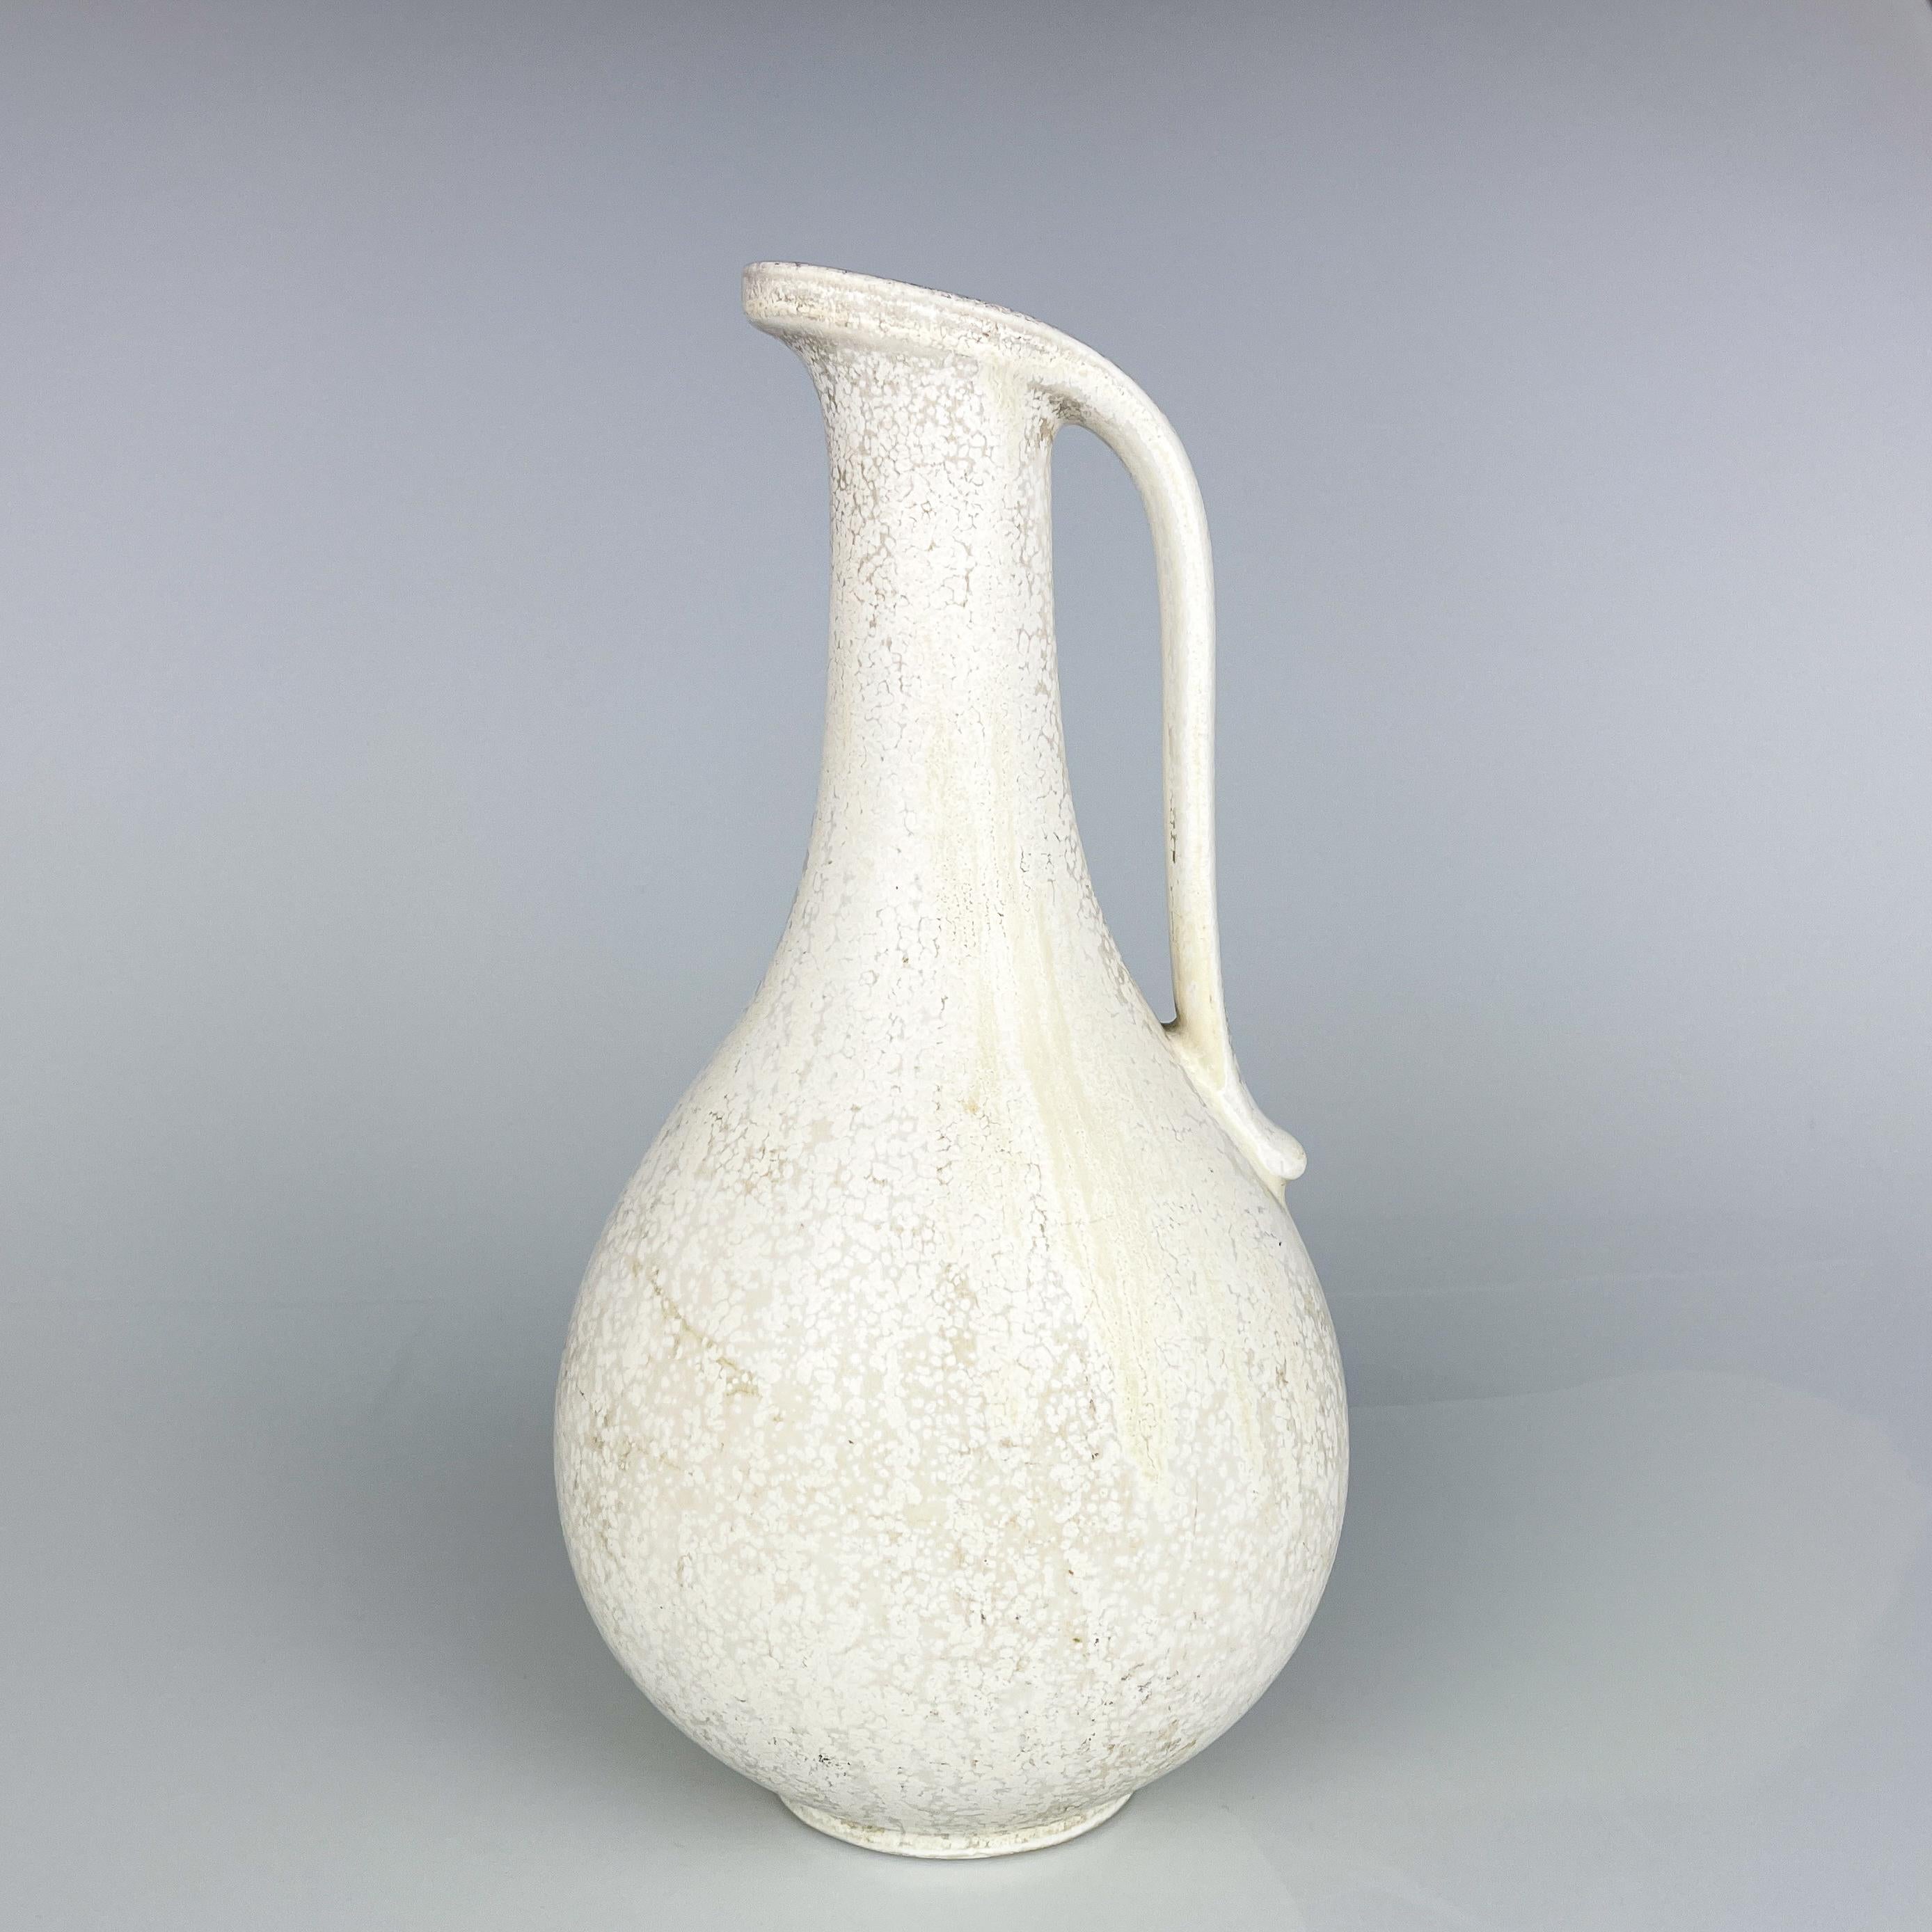 Gunnar Nylund, vase/pichet en grès Rörstrand, Suède, vers 1950

Description
Vase/pichet en grès, recouvert d'une belle glaçure blanche 